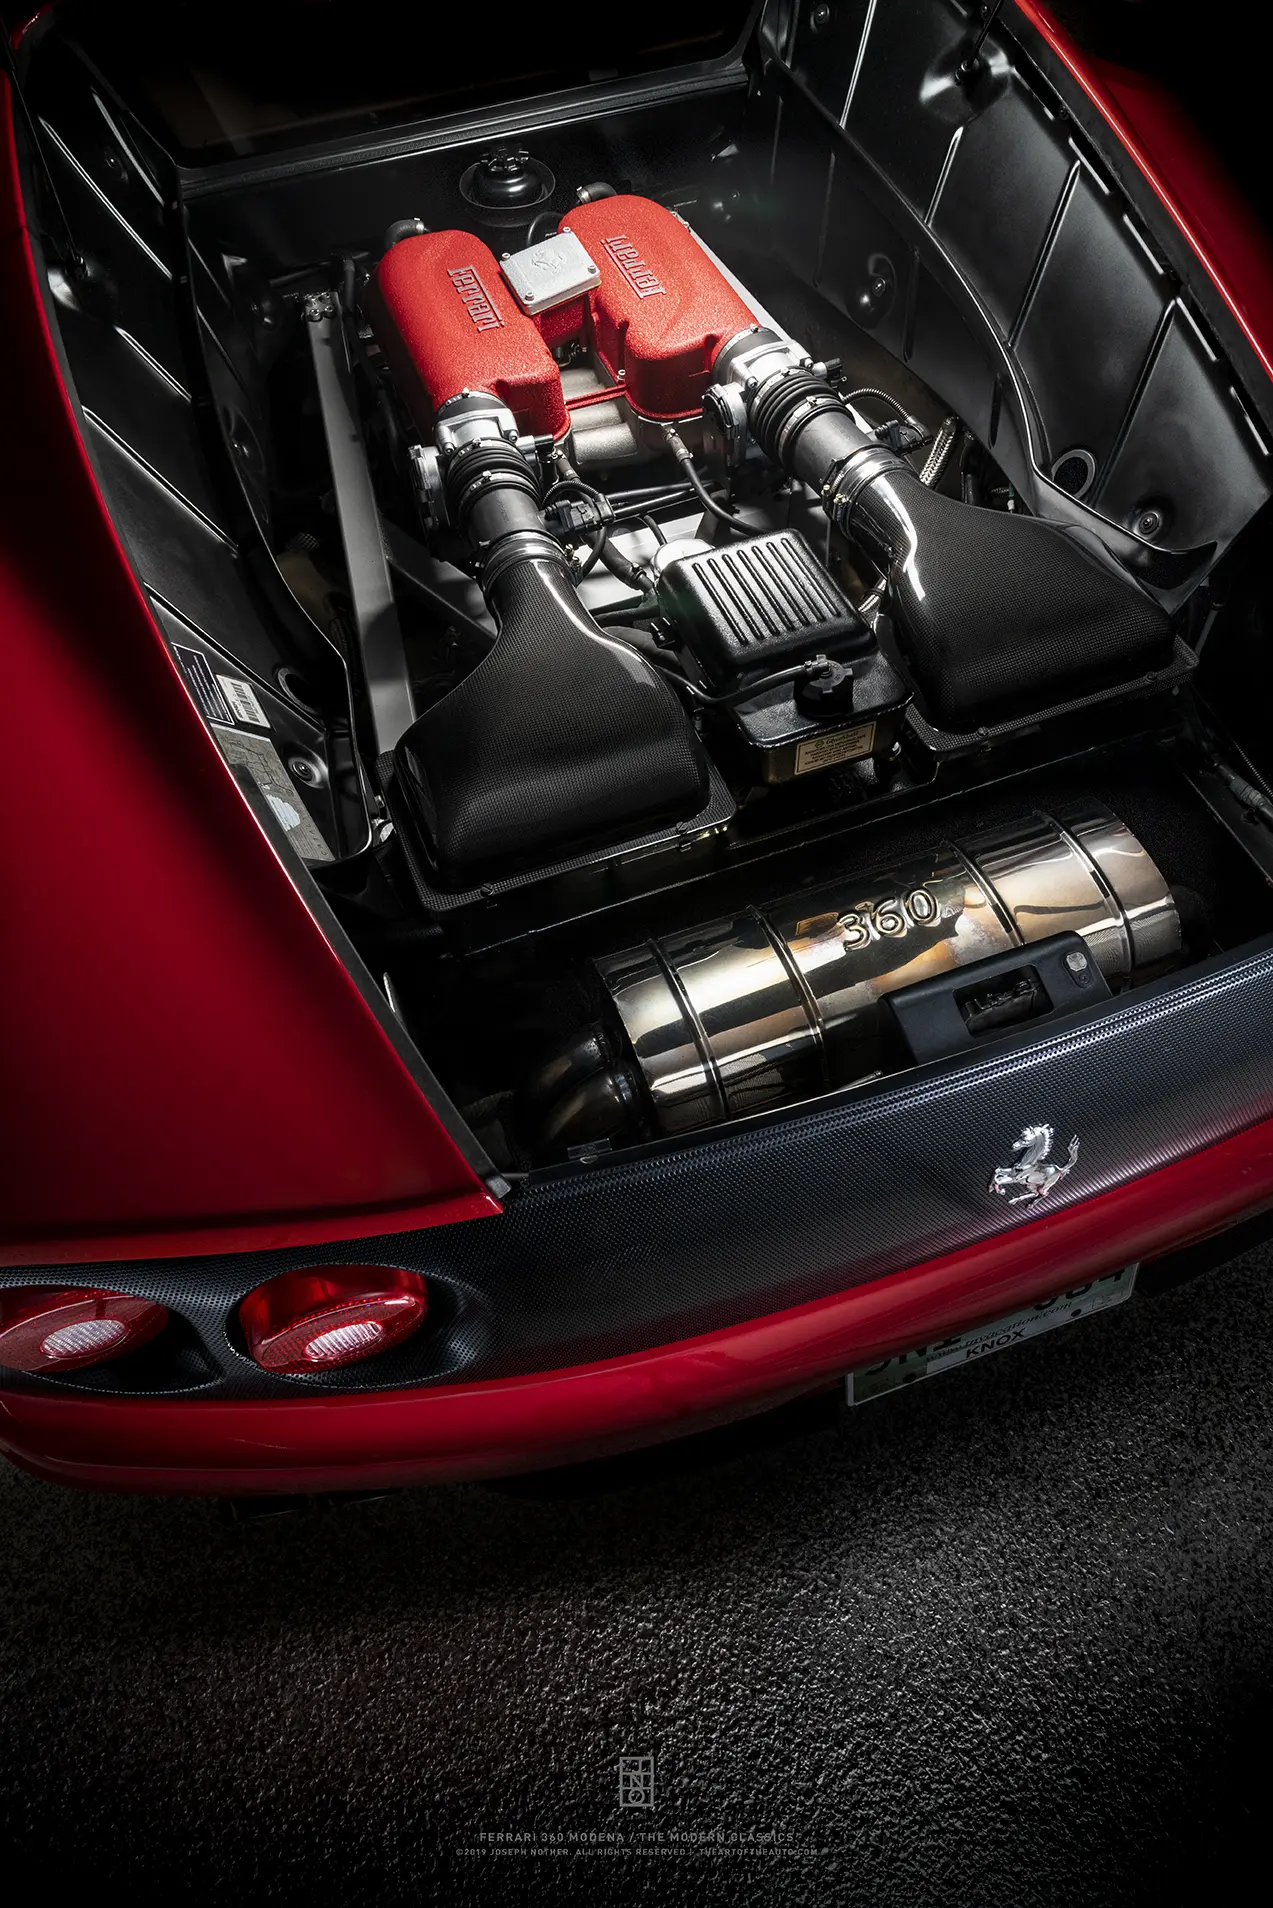 ferrari 360 spider engine - Is the Ferrari 360 naturally aspirated